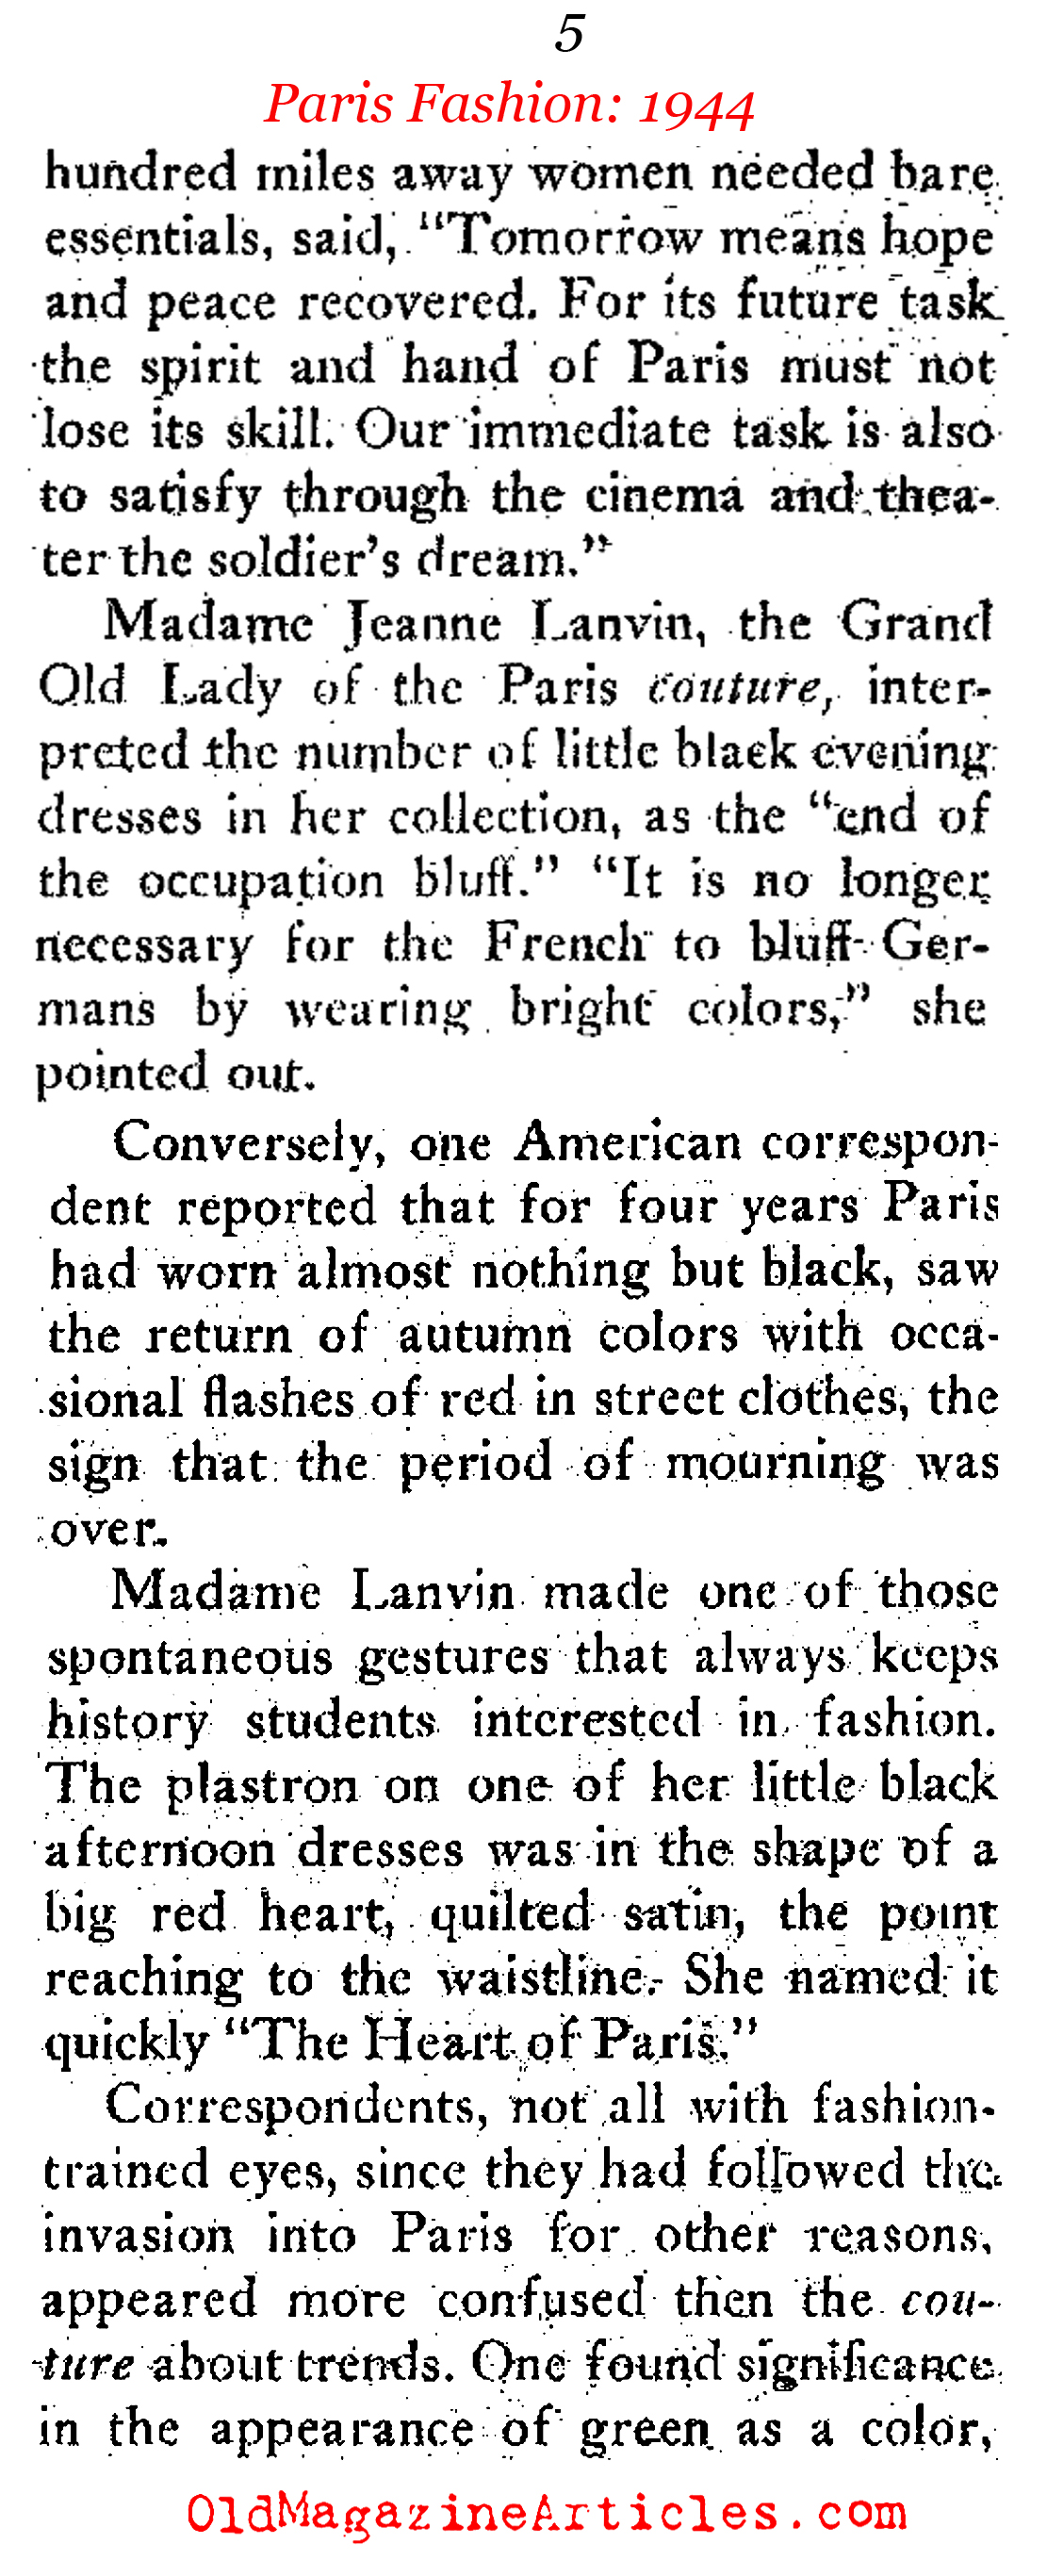 Paris Fashion Liberated (Tricolor Magazine, 1944)